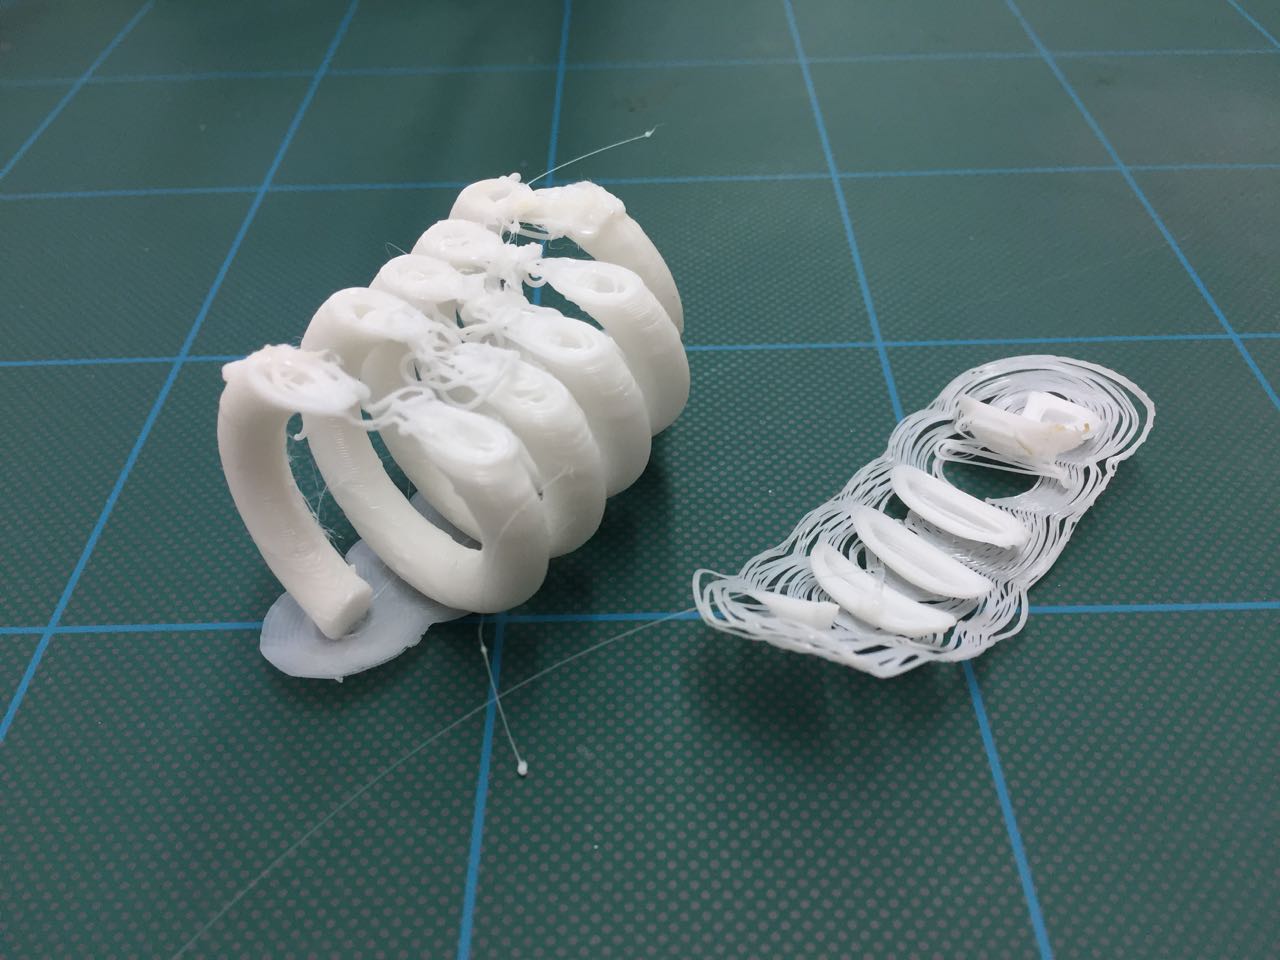 3D print attempt 2